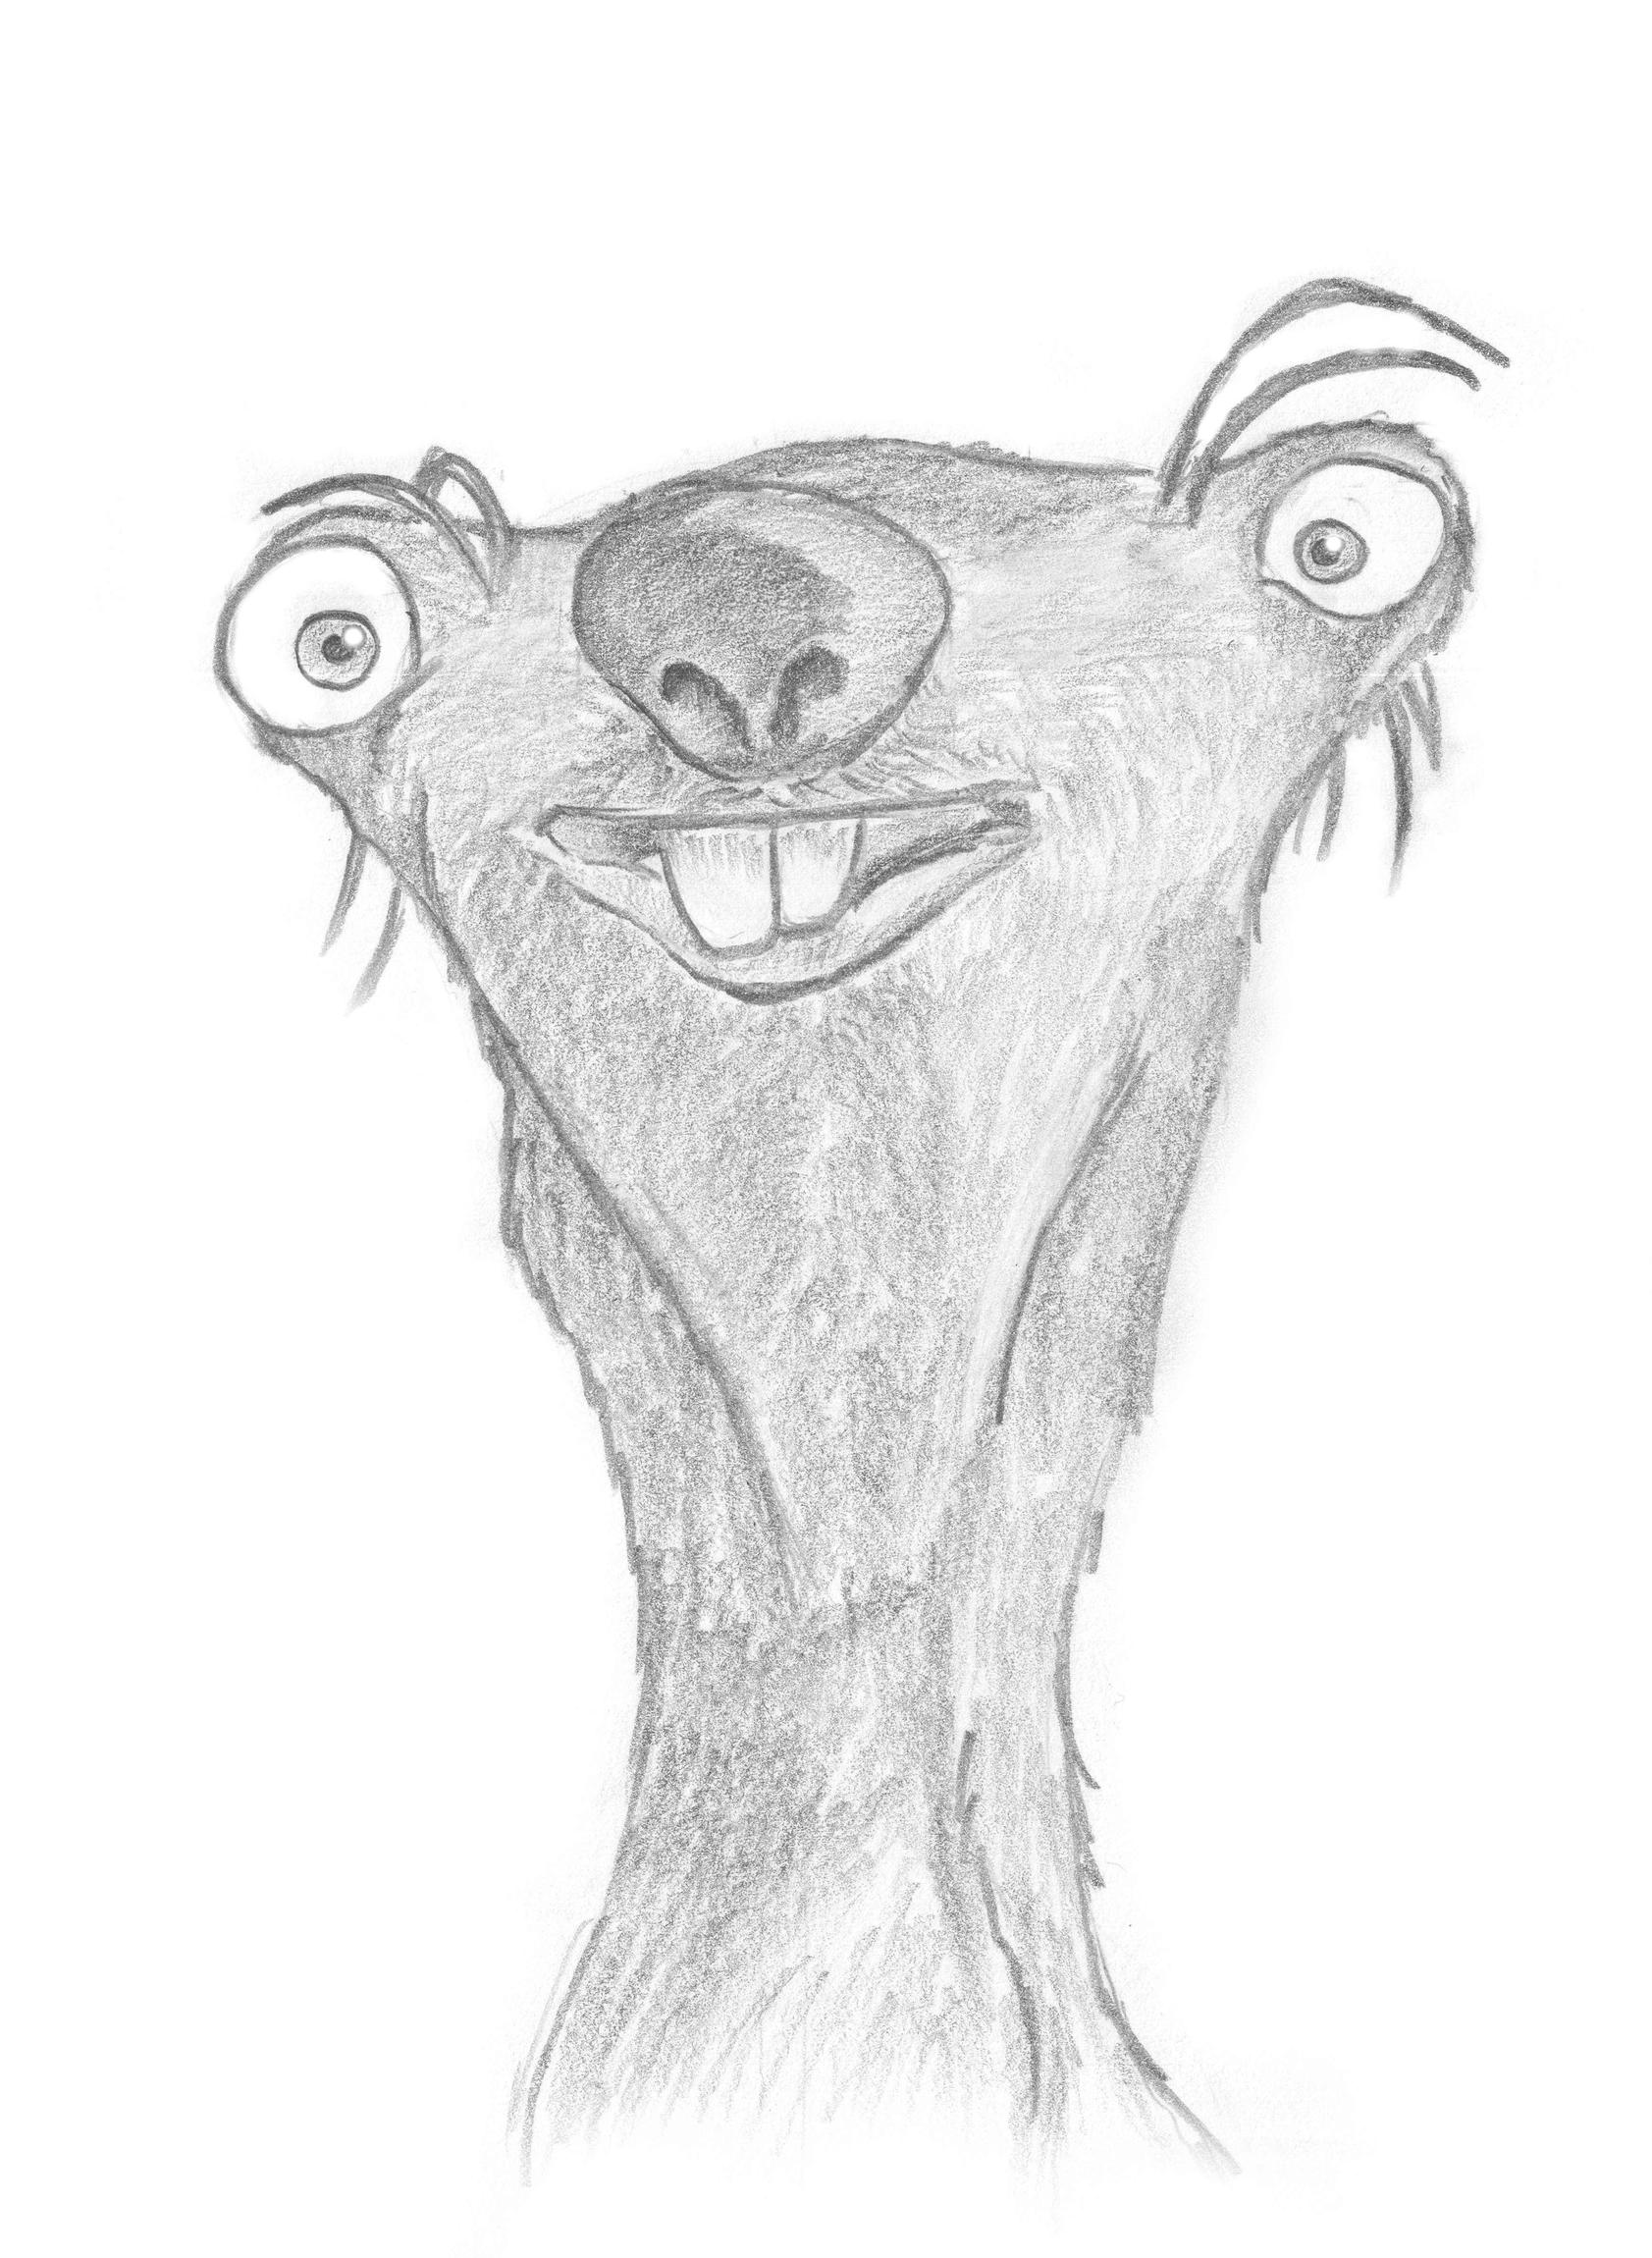 Sid the Sloth.